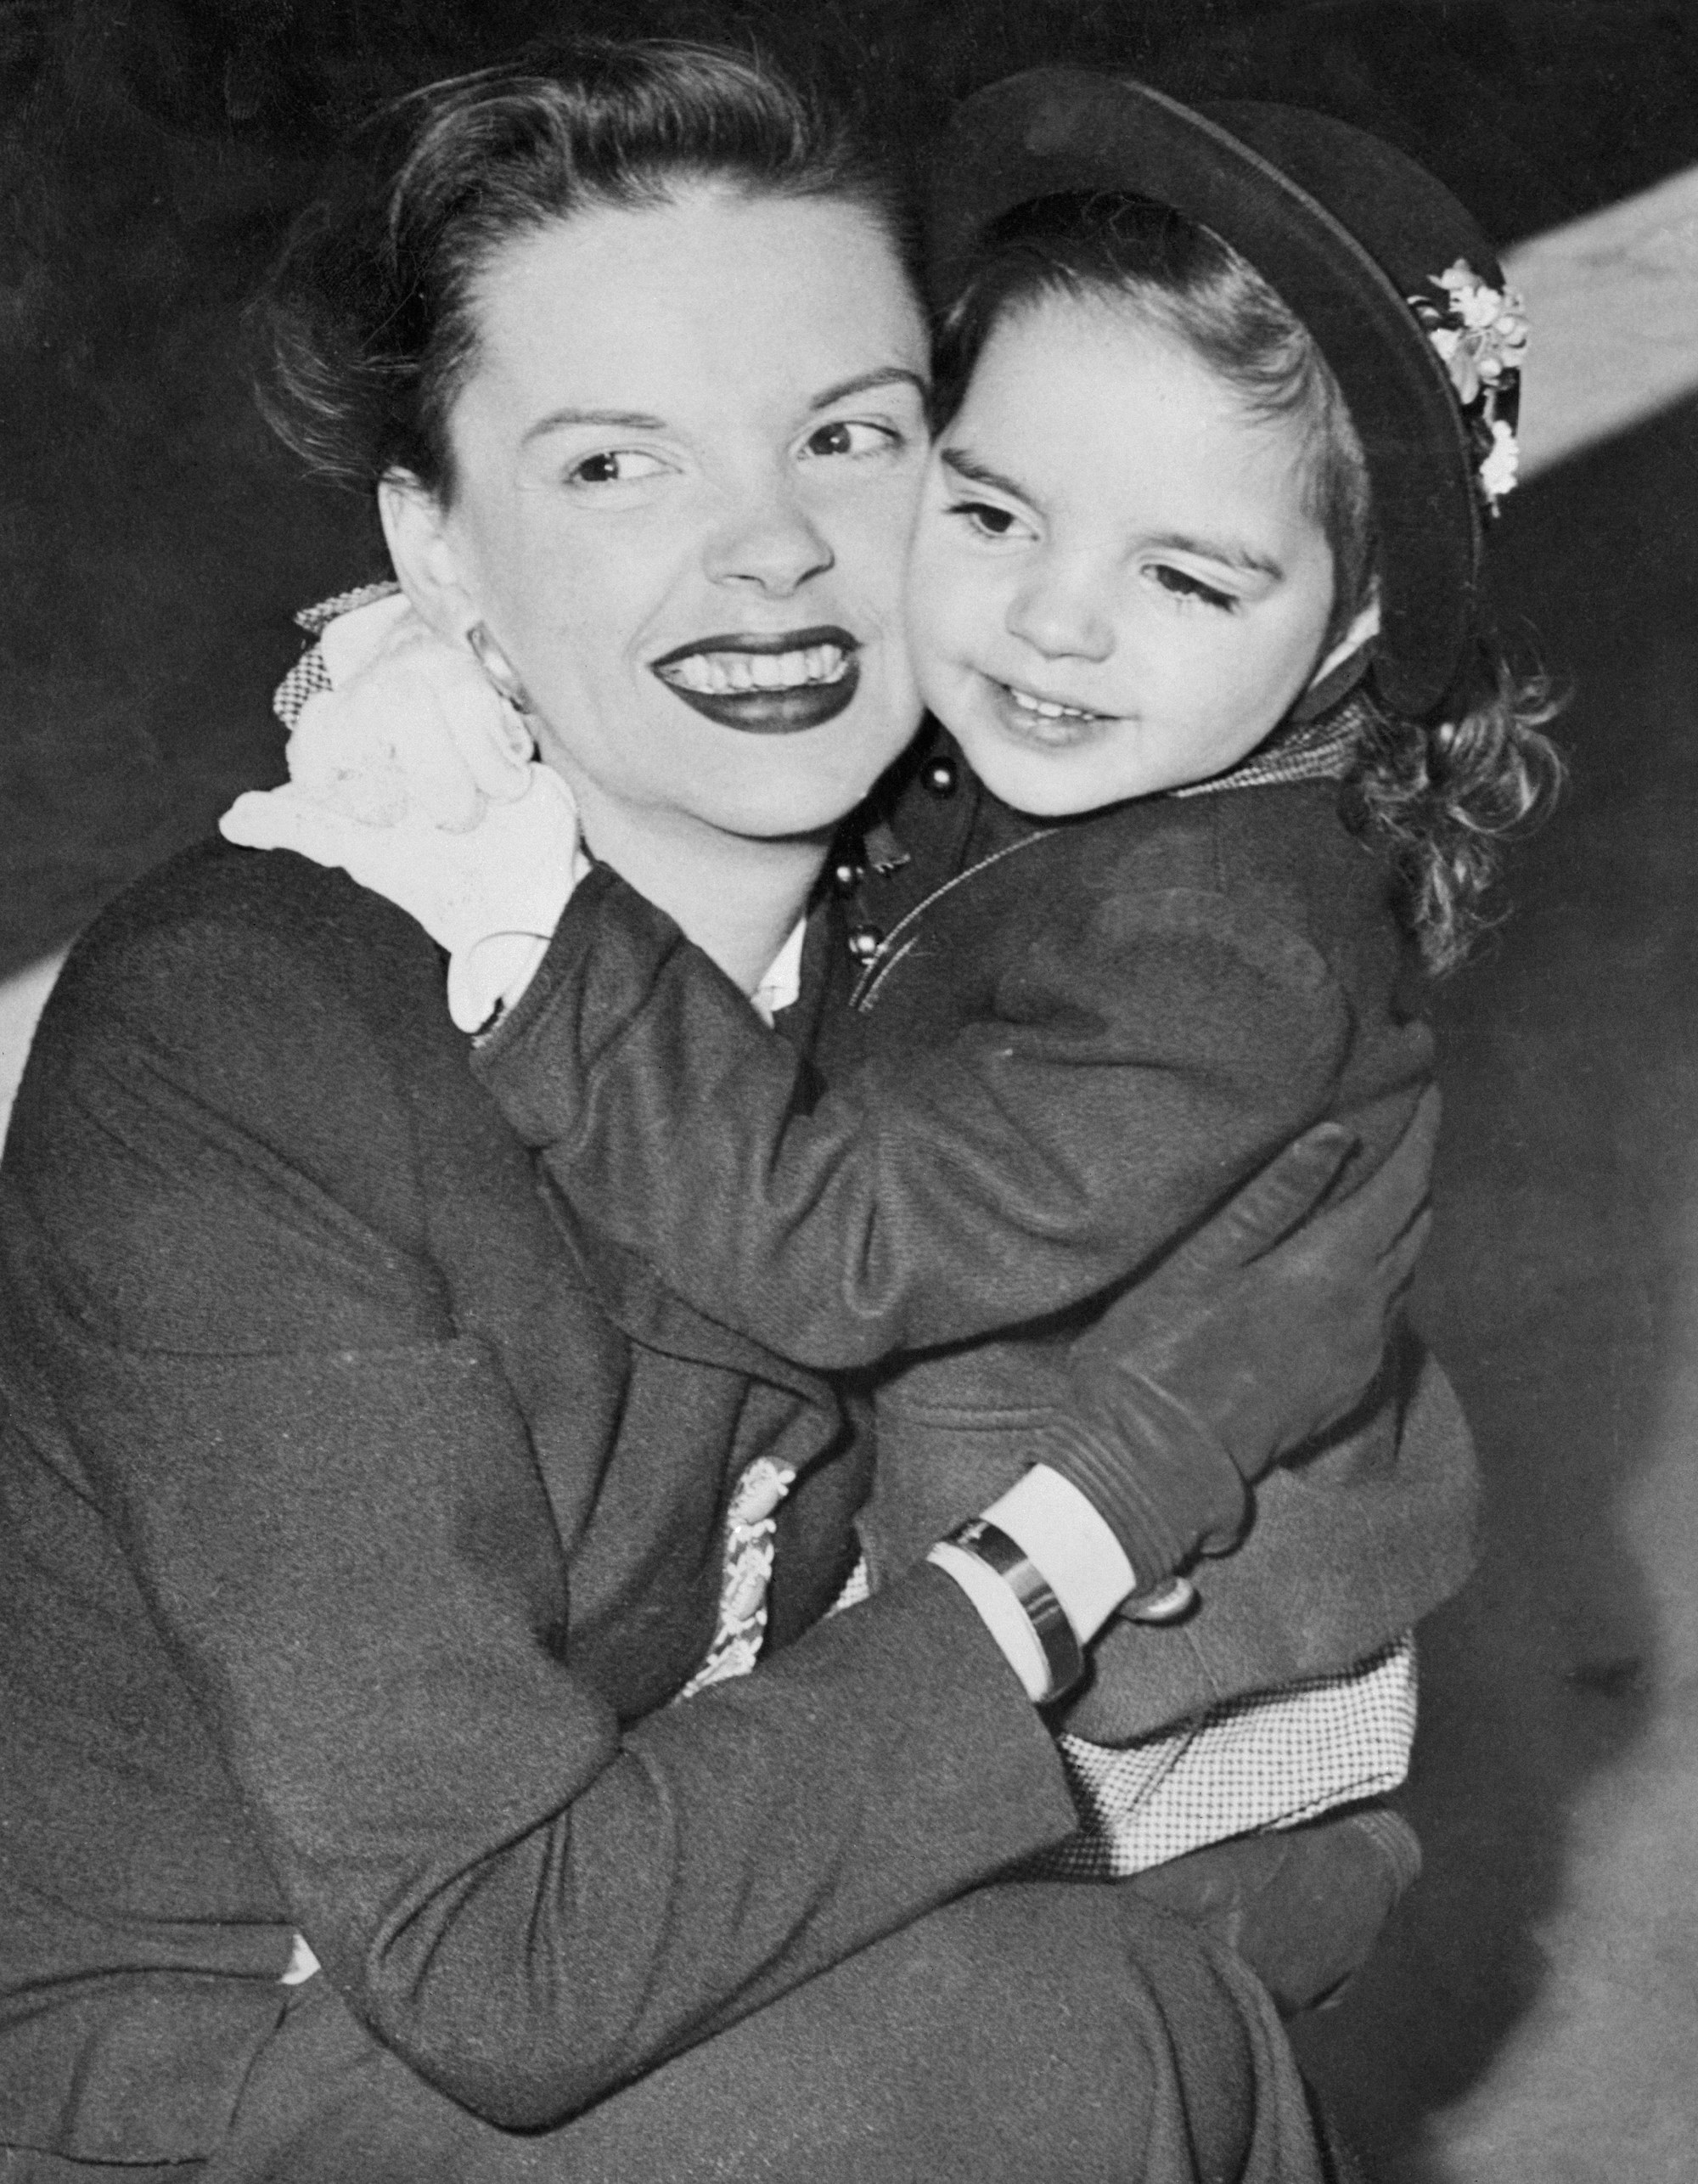 Judy Garland hugging a young Liza Minnelli